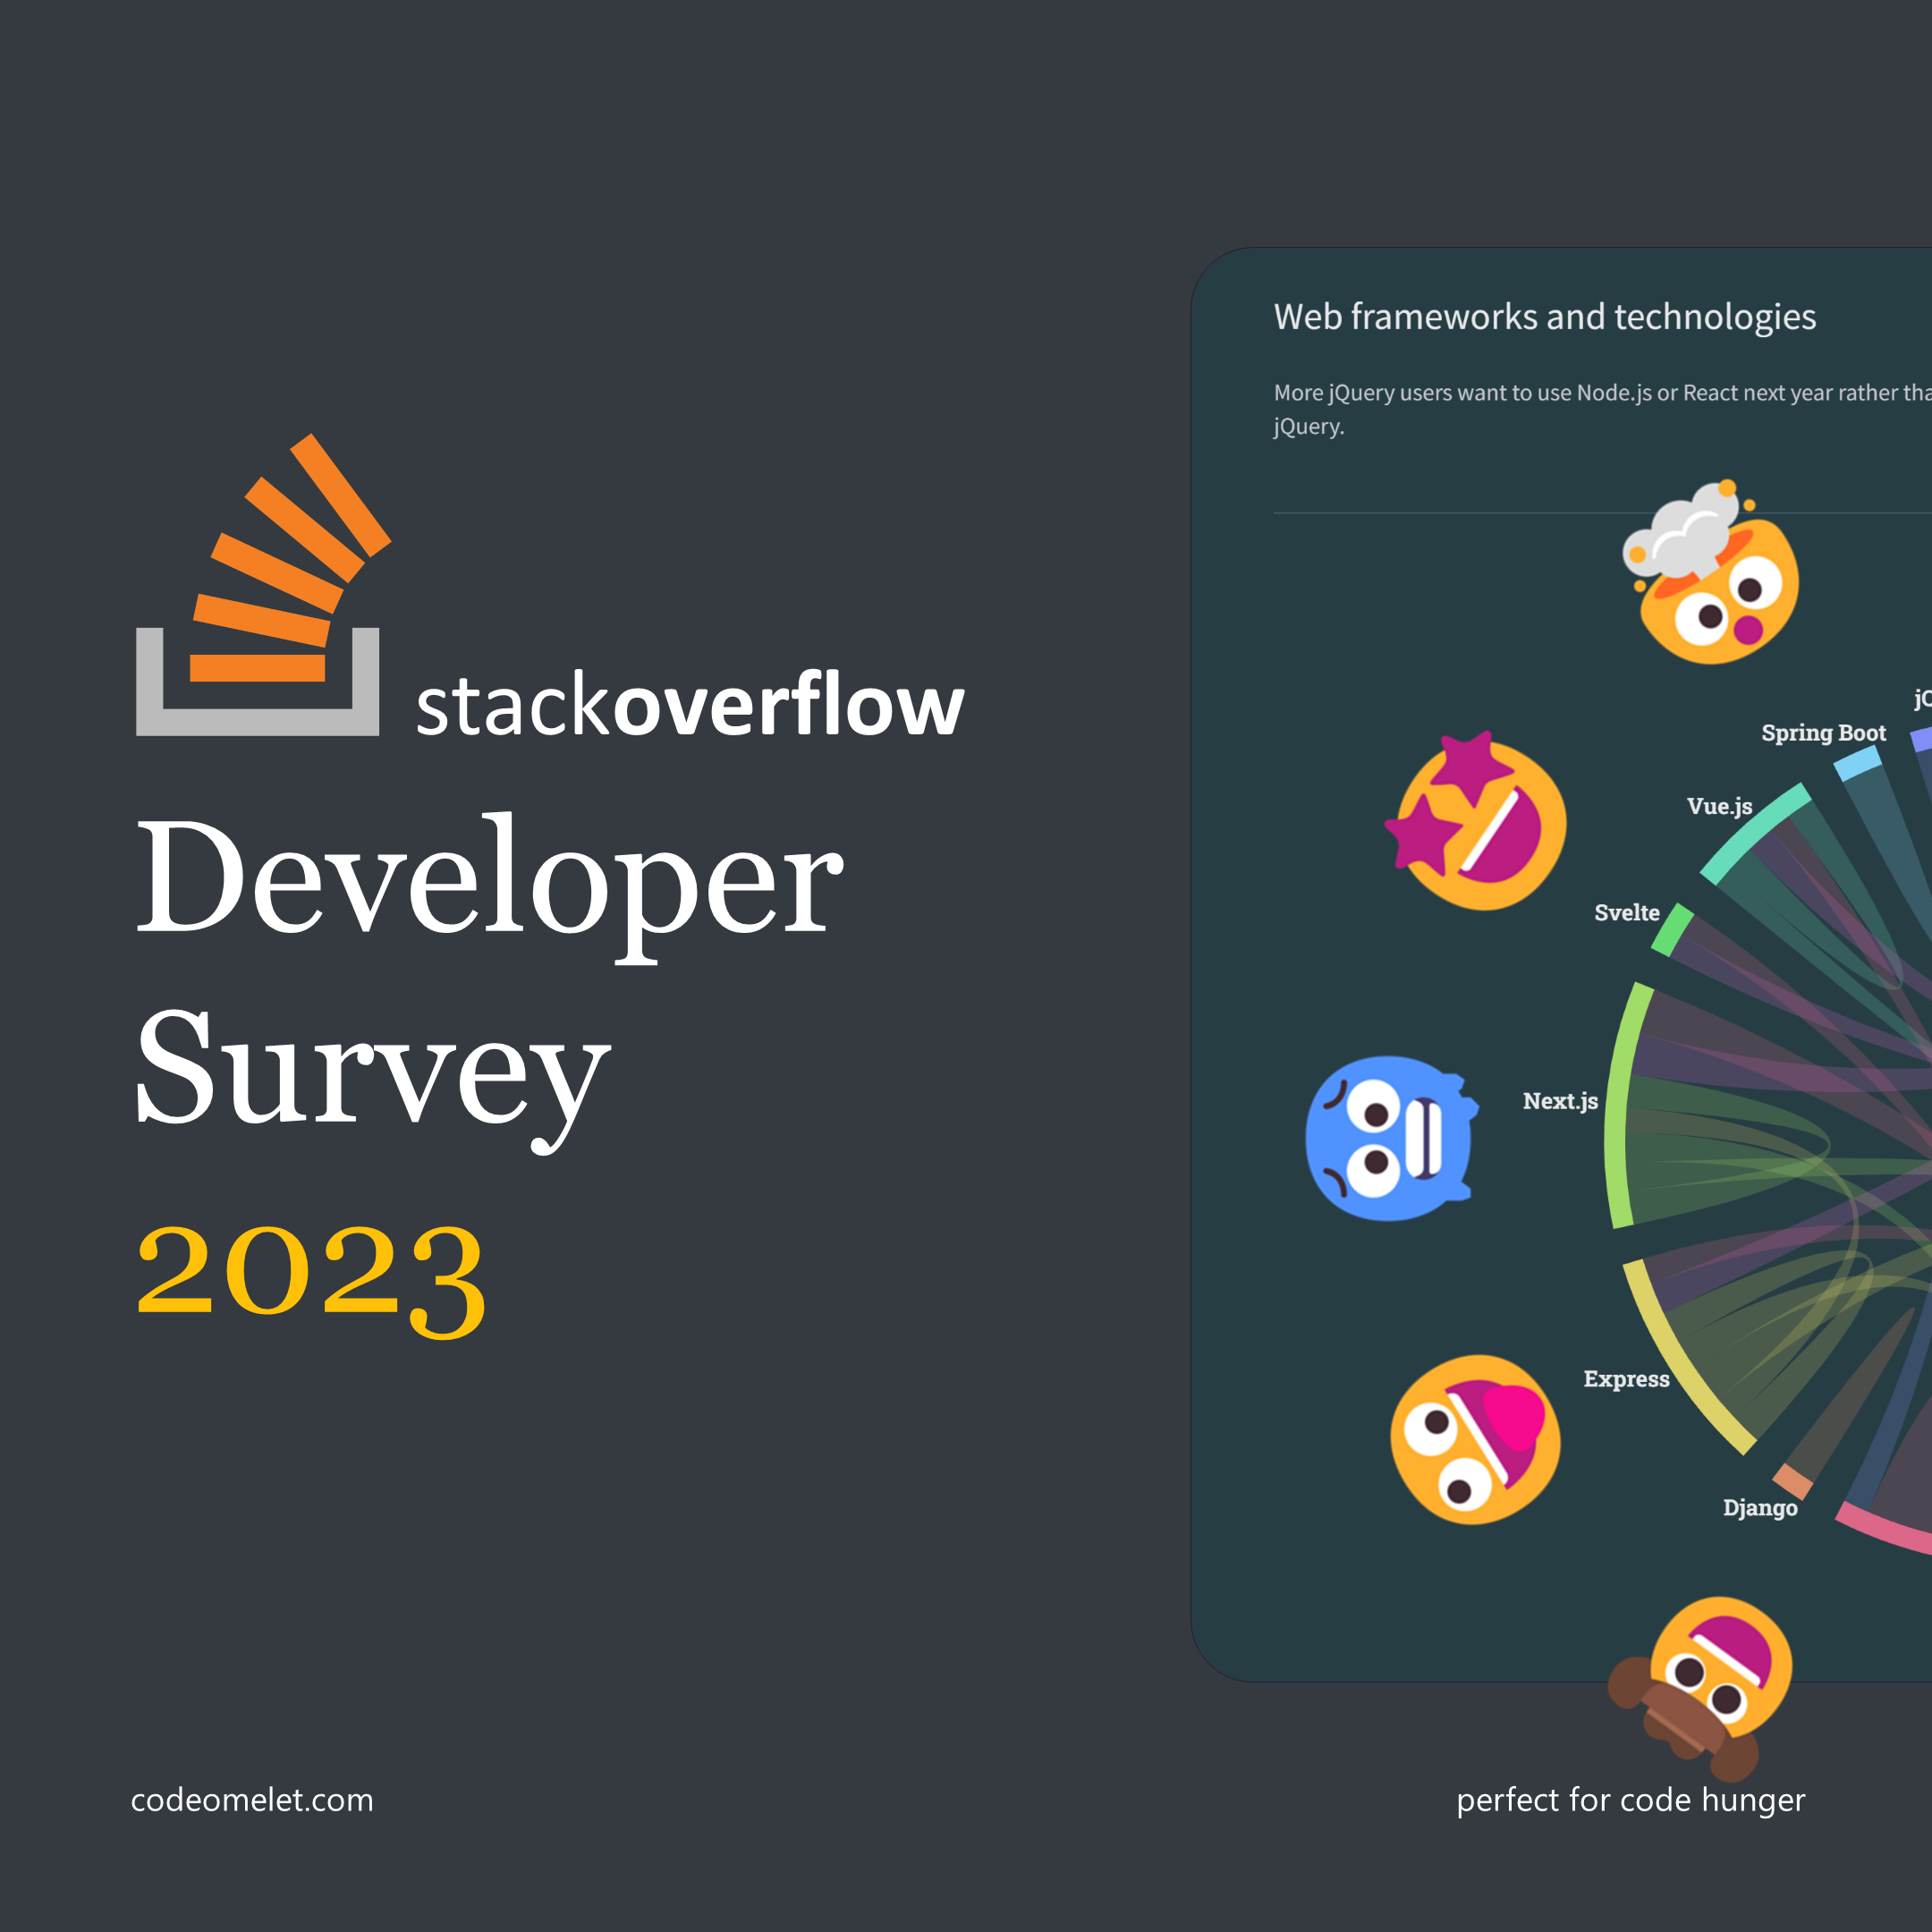 Stack Overflow Developer Survey 2023